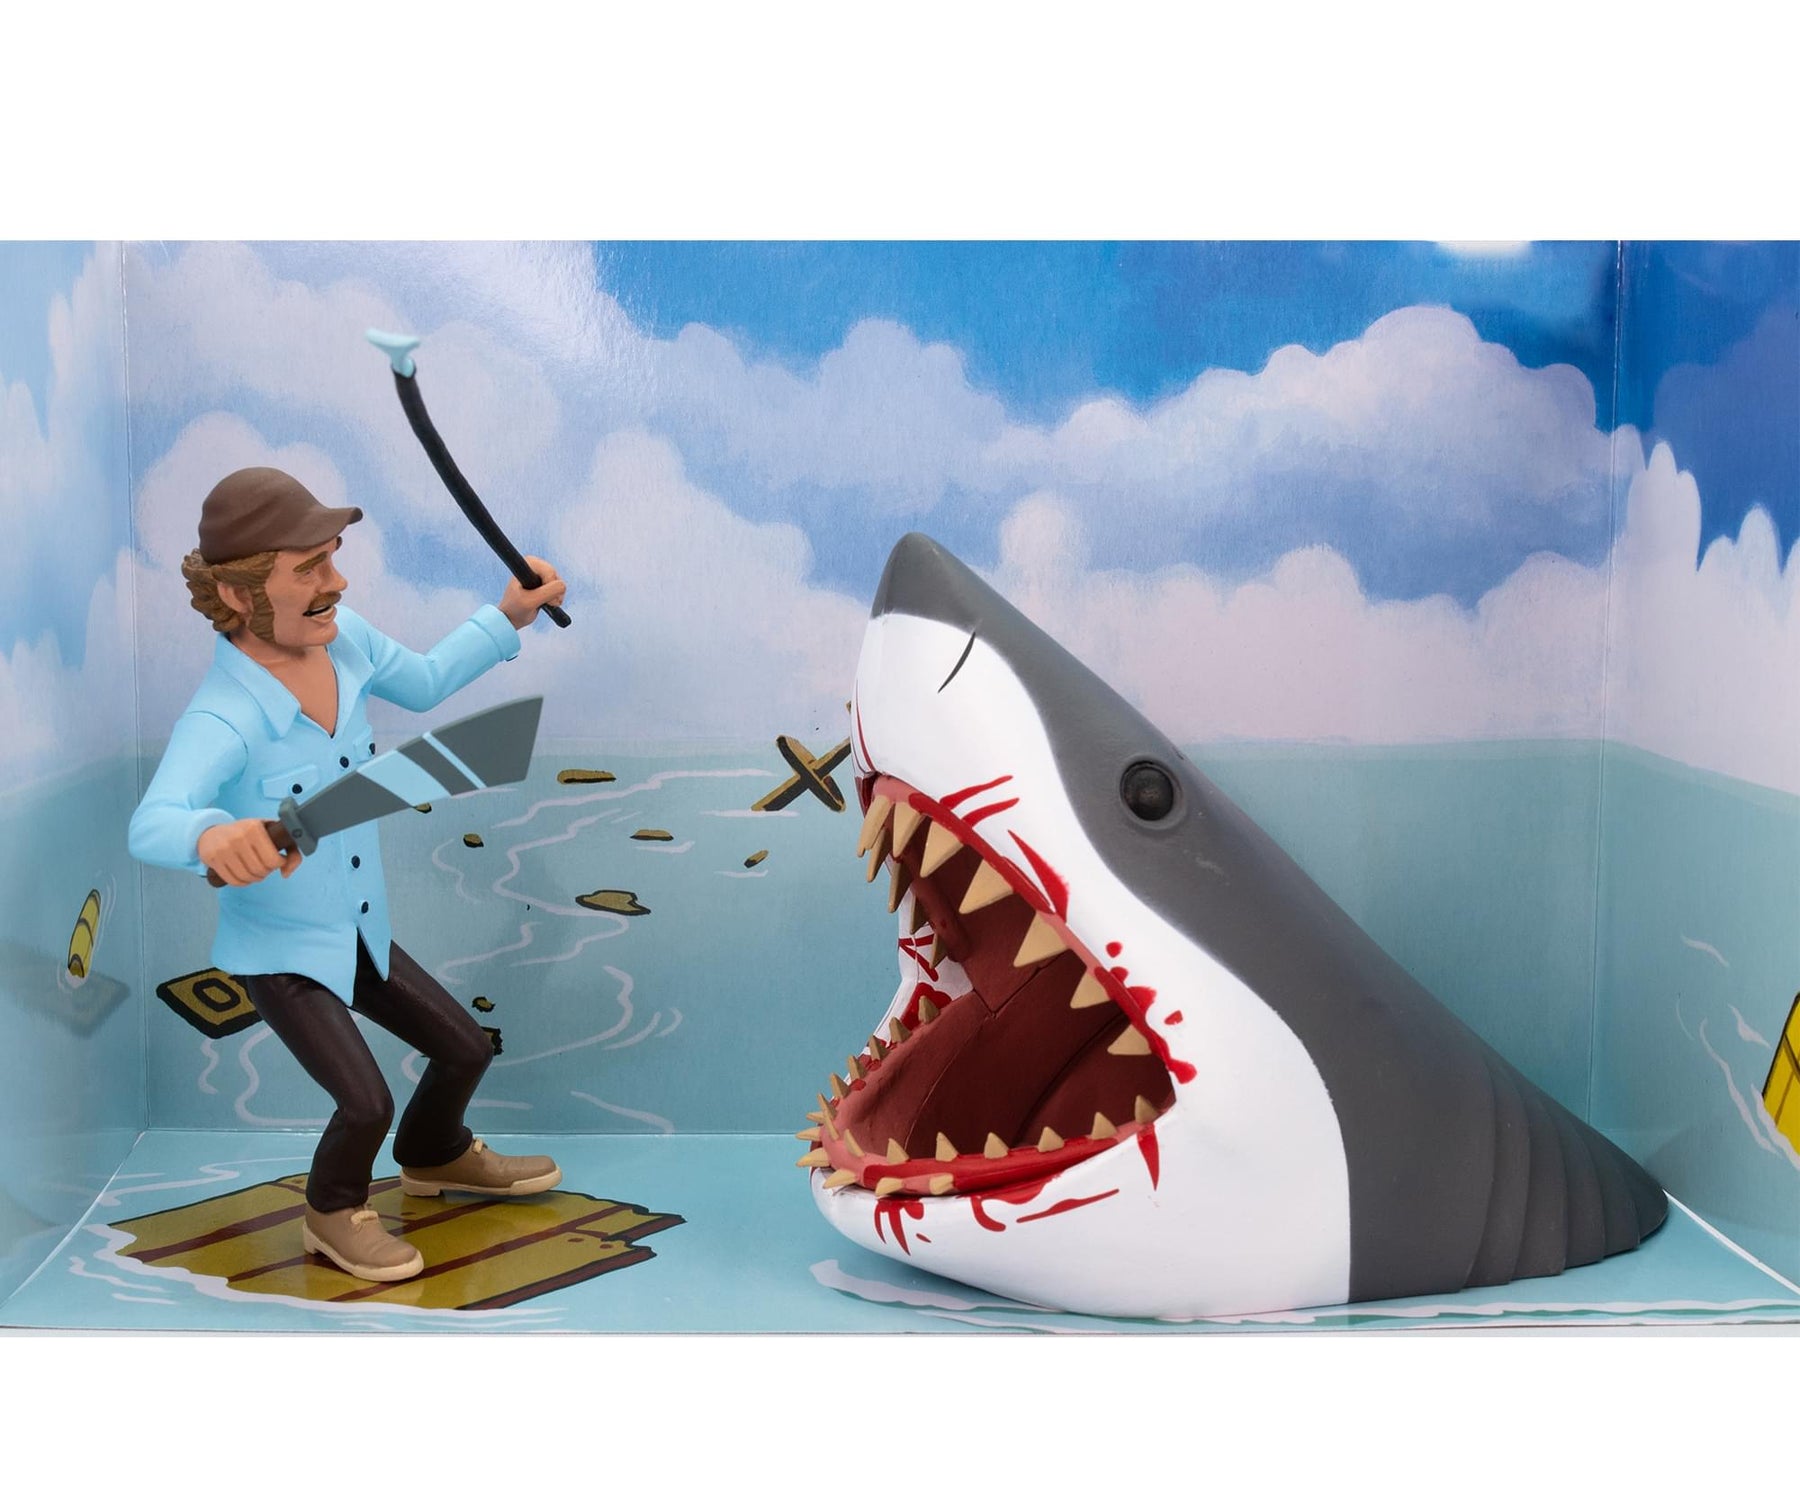 JAWS Toony Terrors Quint & Shark Figure 2-Pack